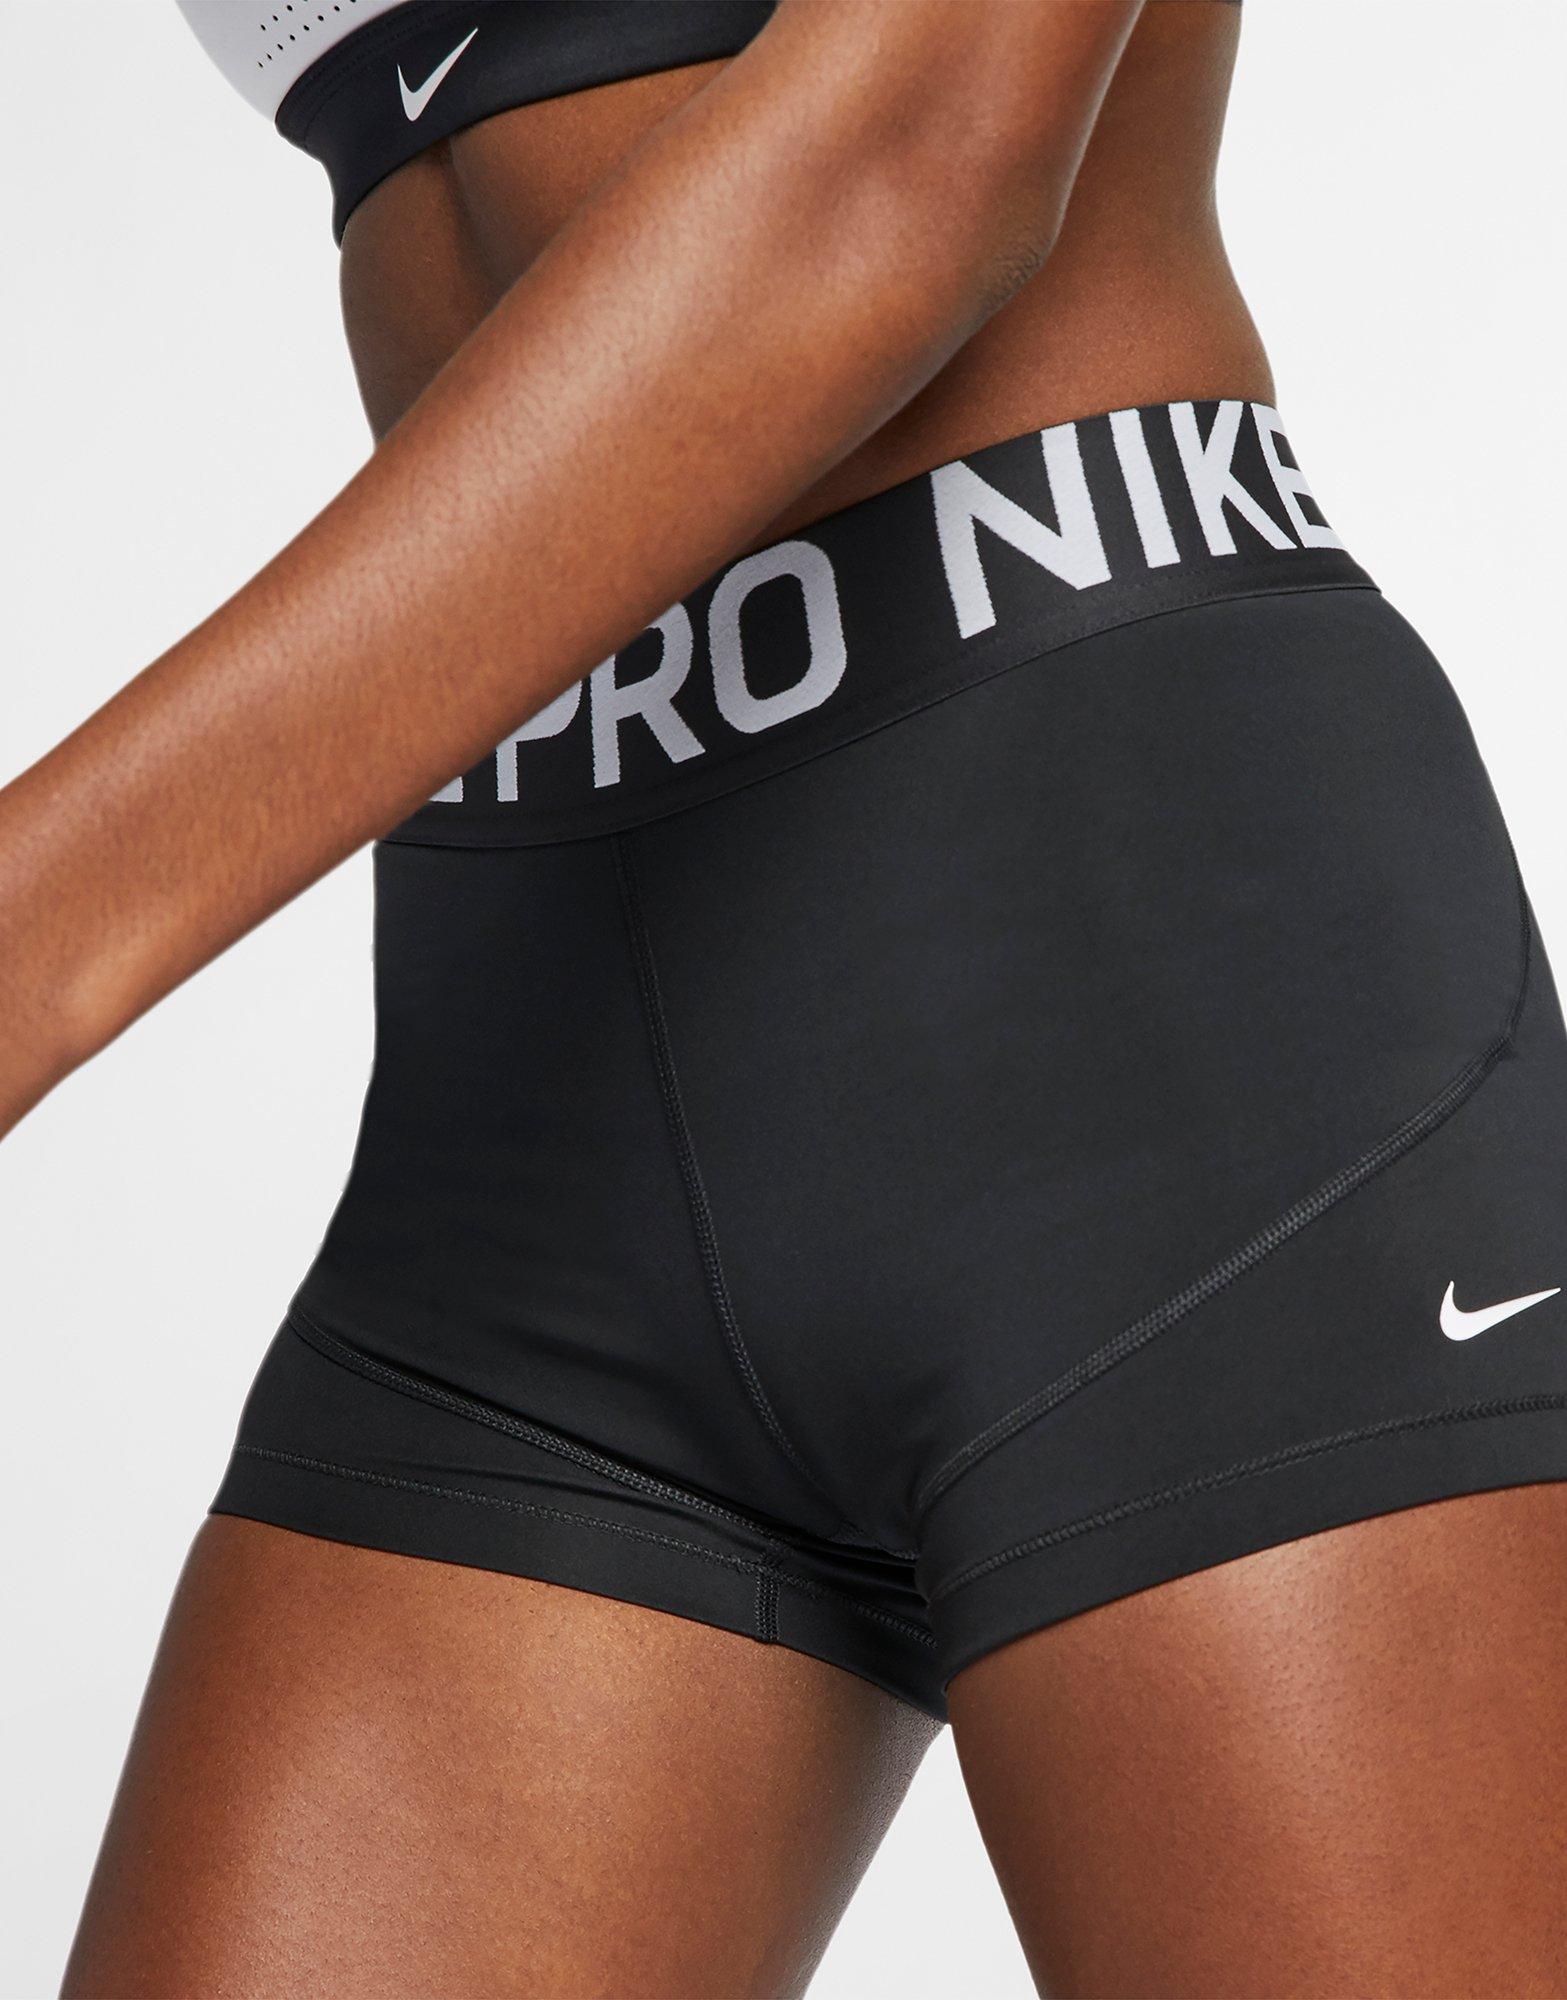 nike pro women's 3 training shorts